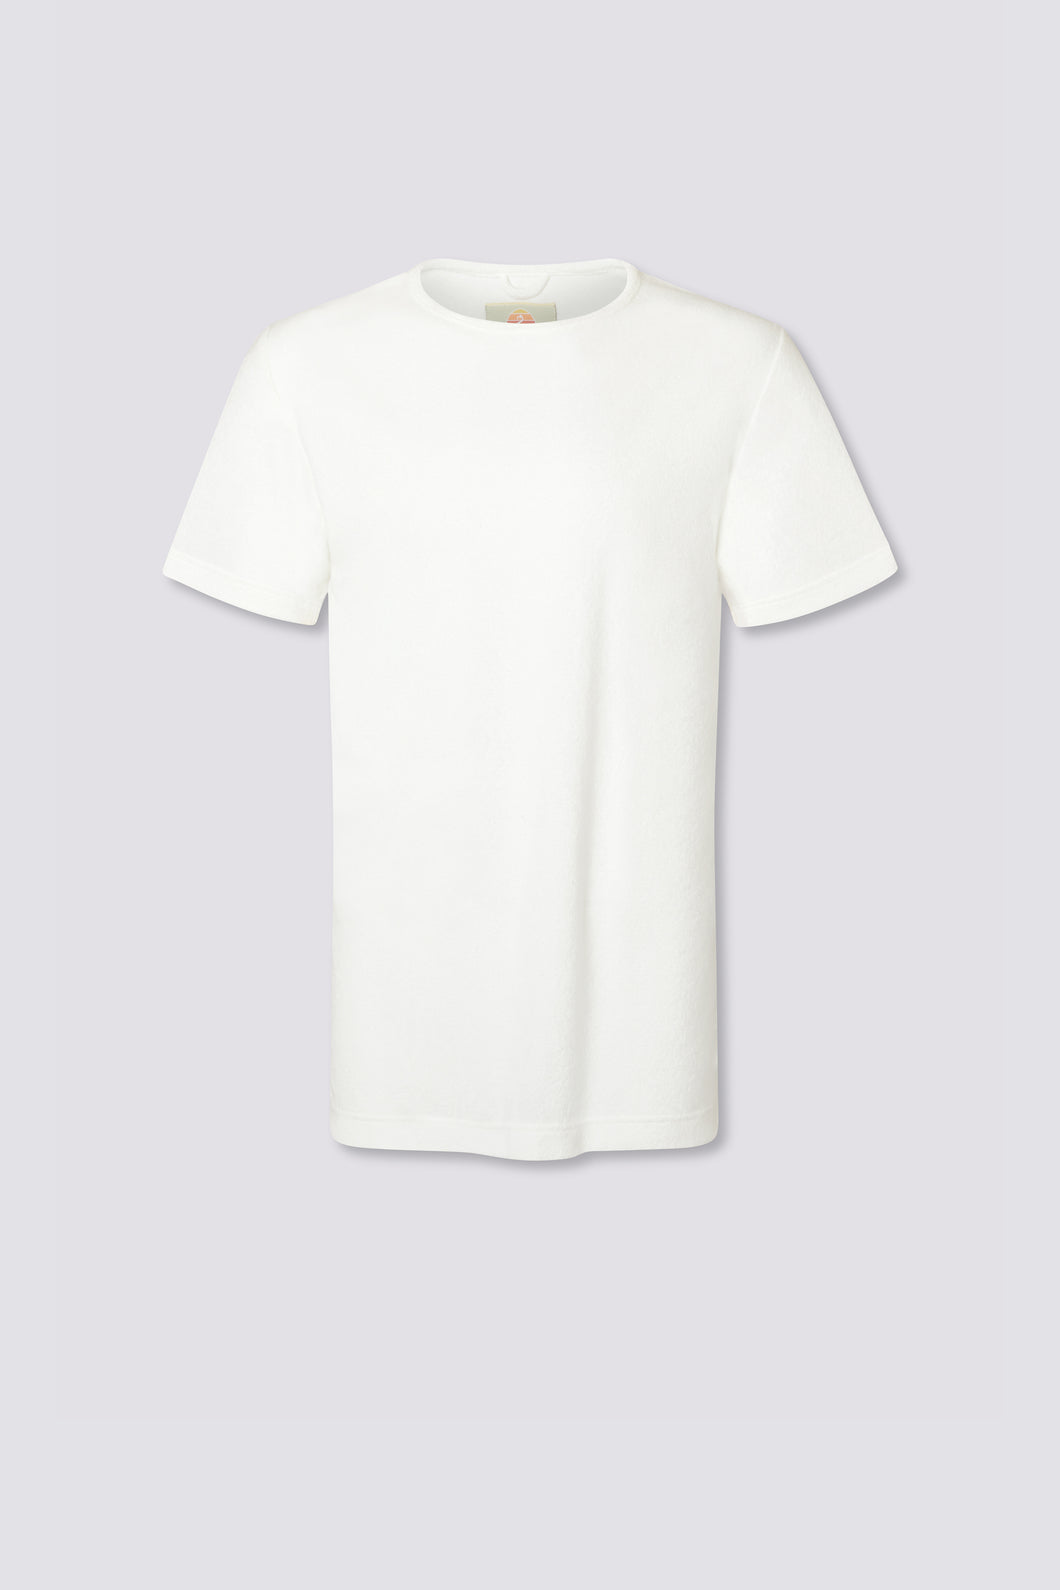 Terry Cloth Shirt - Wimbledon White